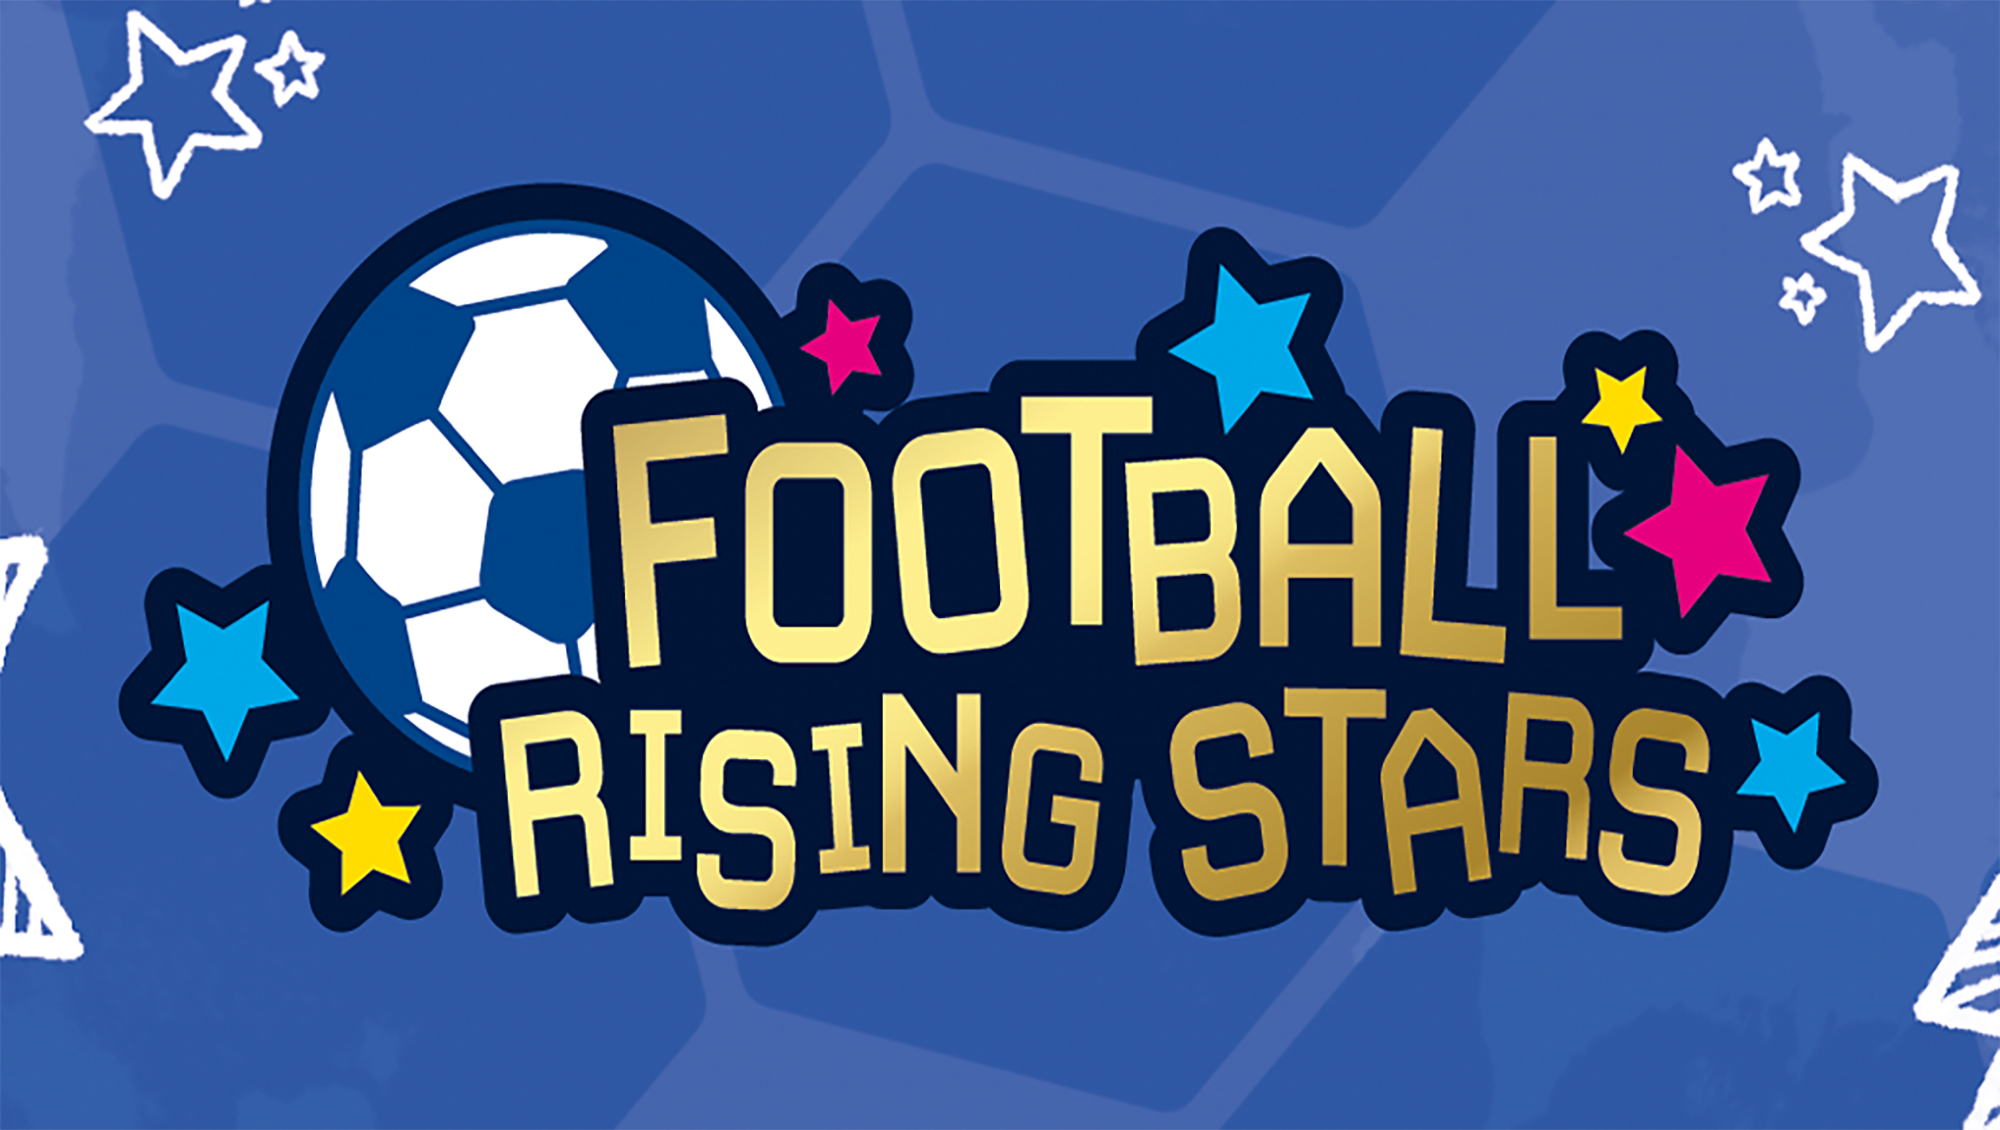 Football Rising Stars